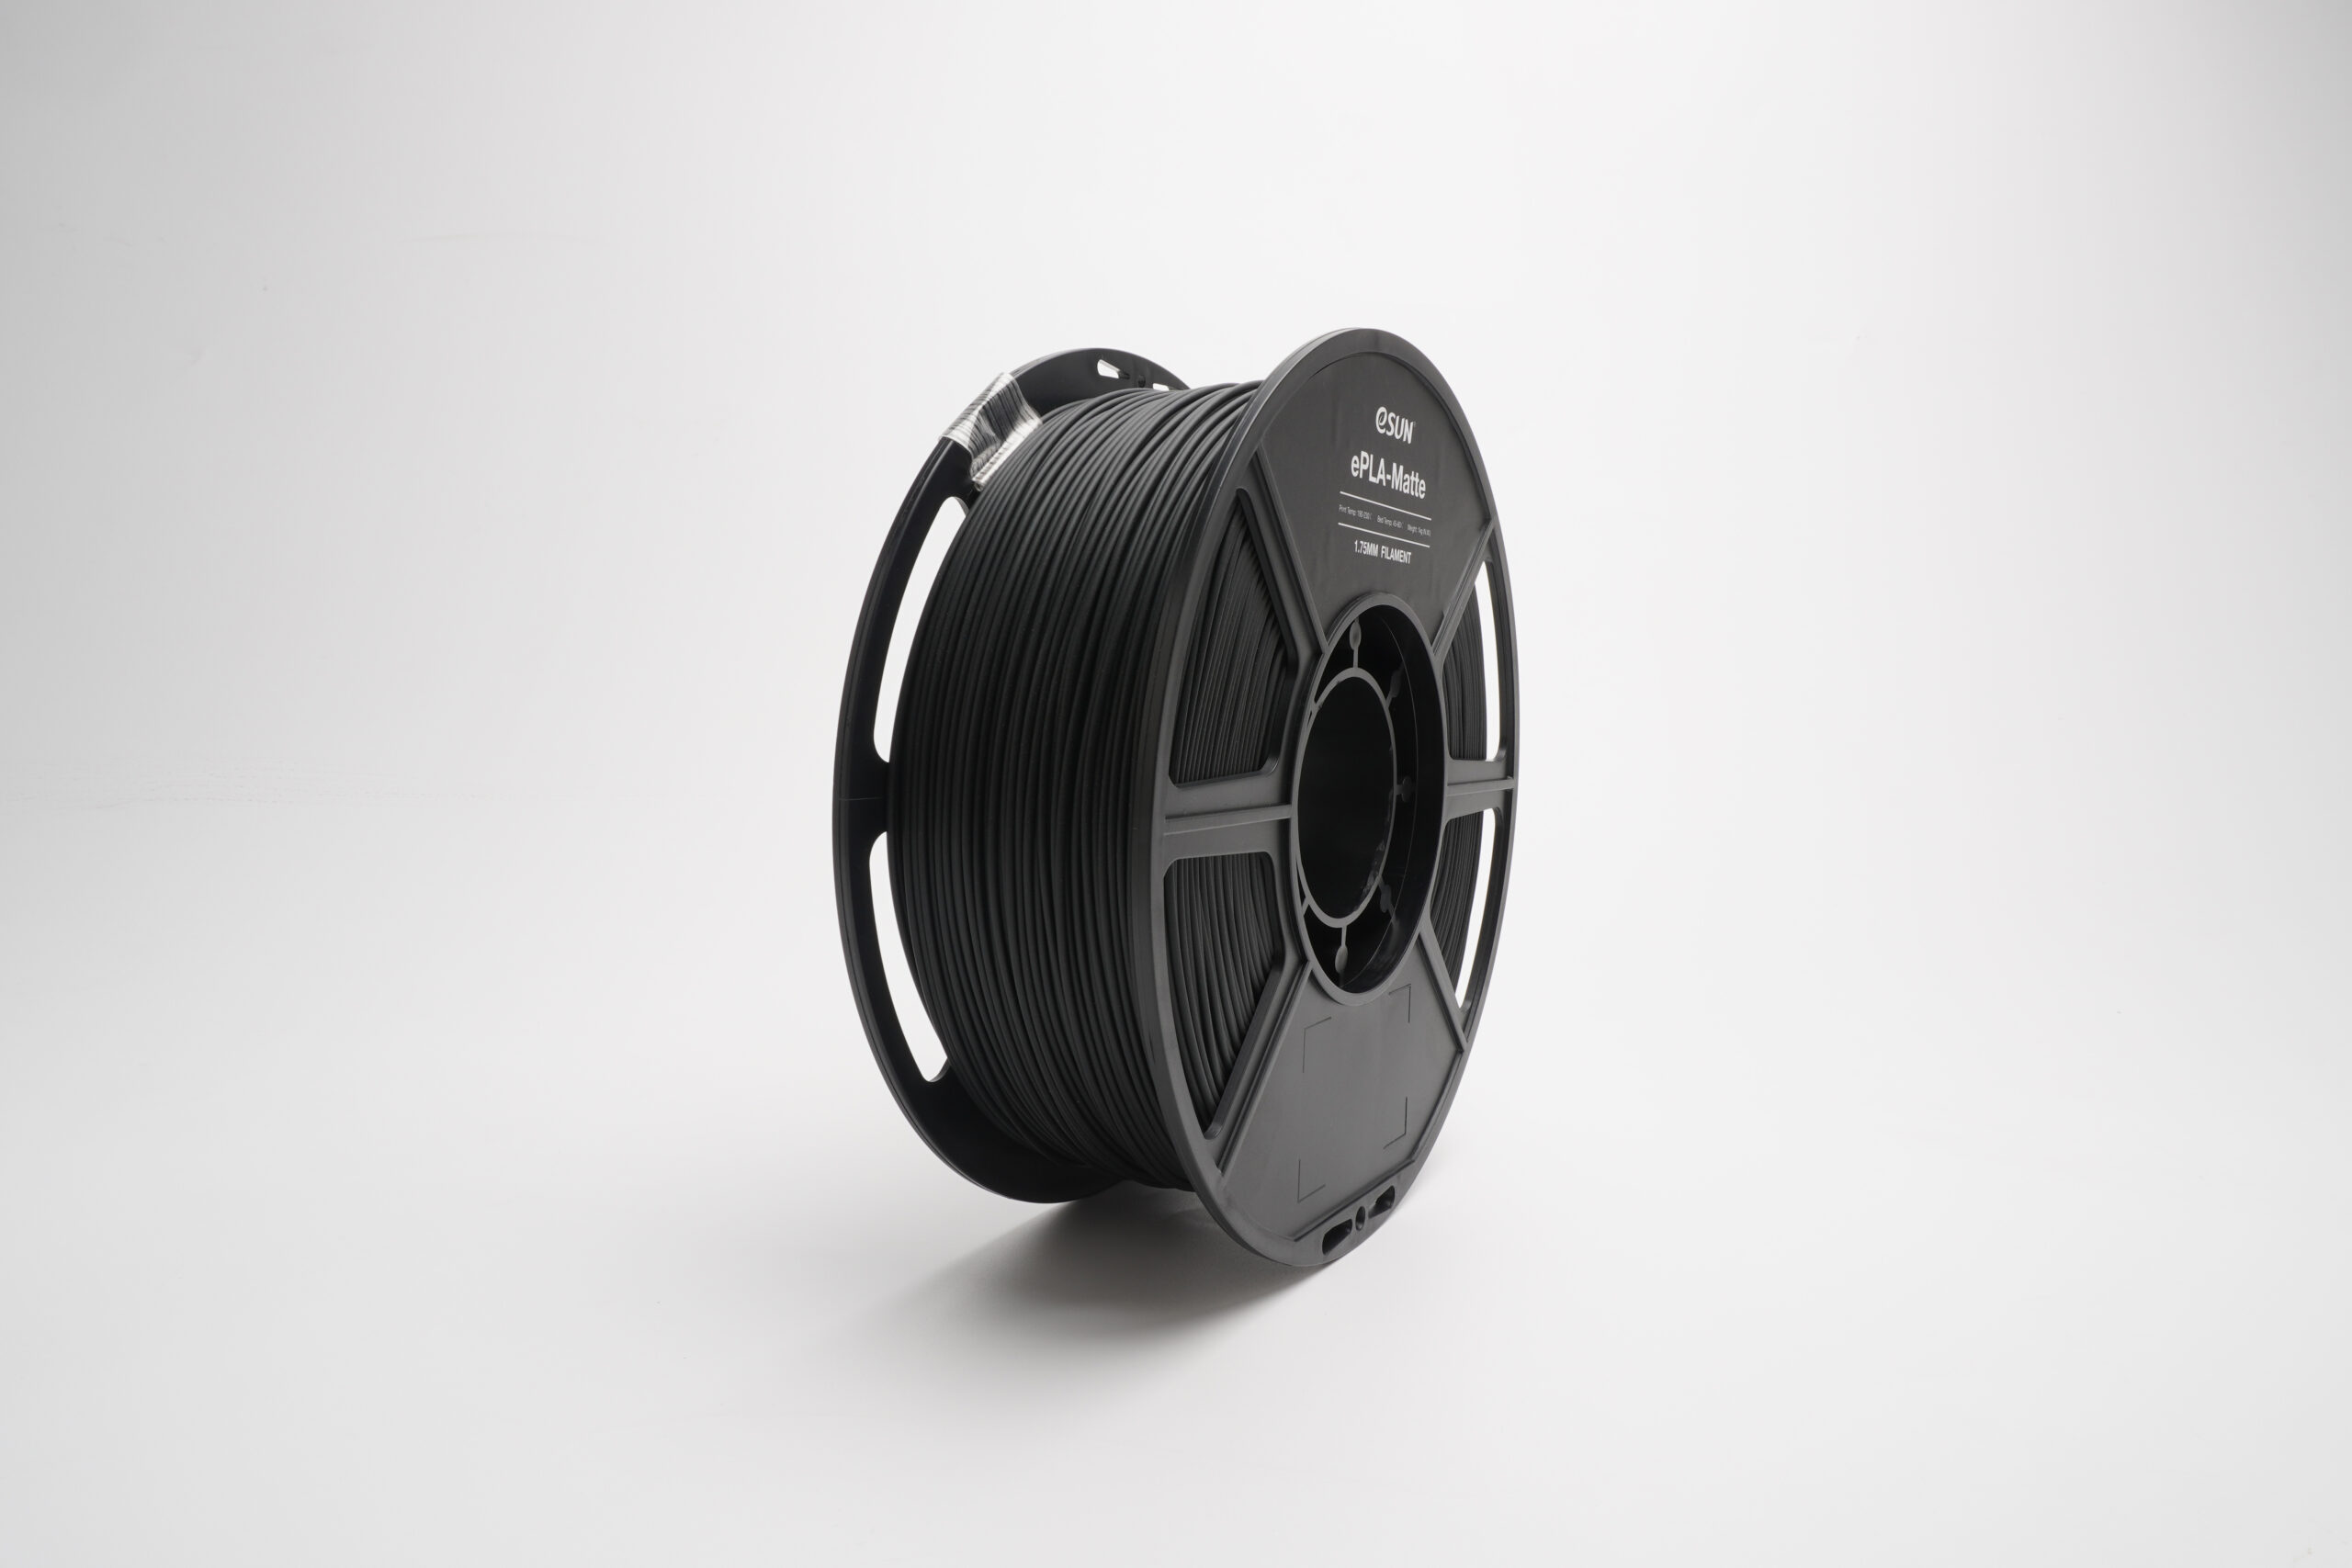 eSun Matte PLA 1.75mm 1kg Deep Black filament - RUUMIK